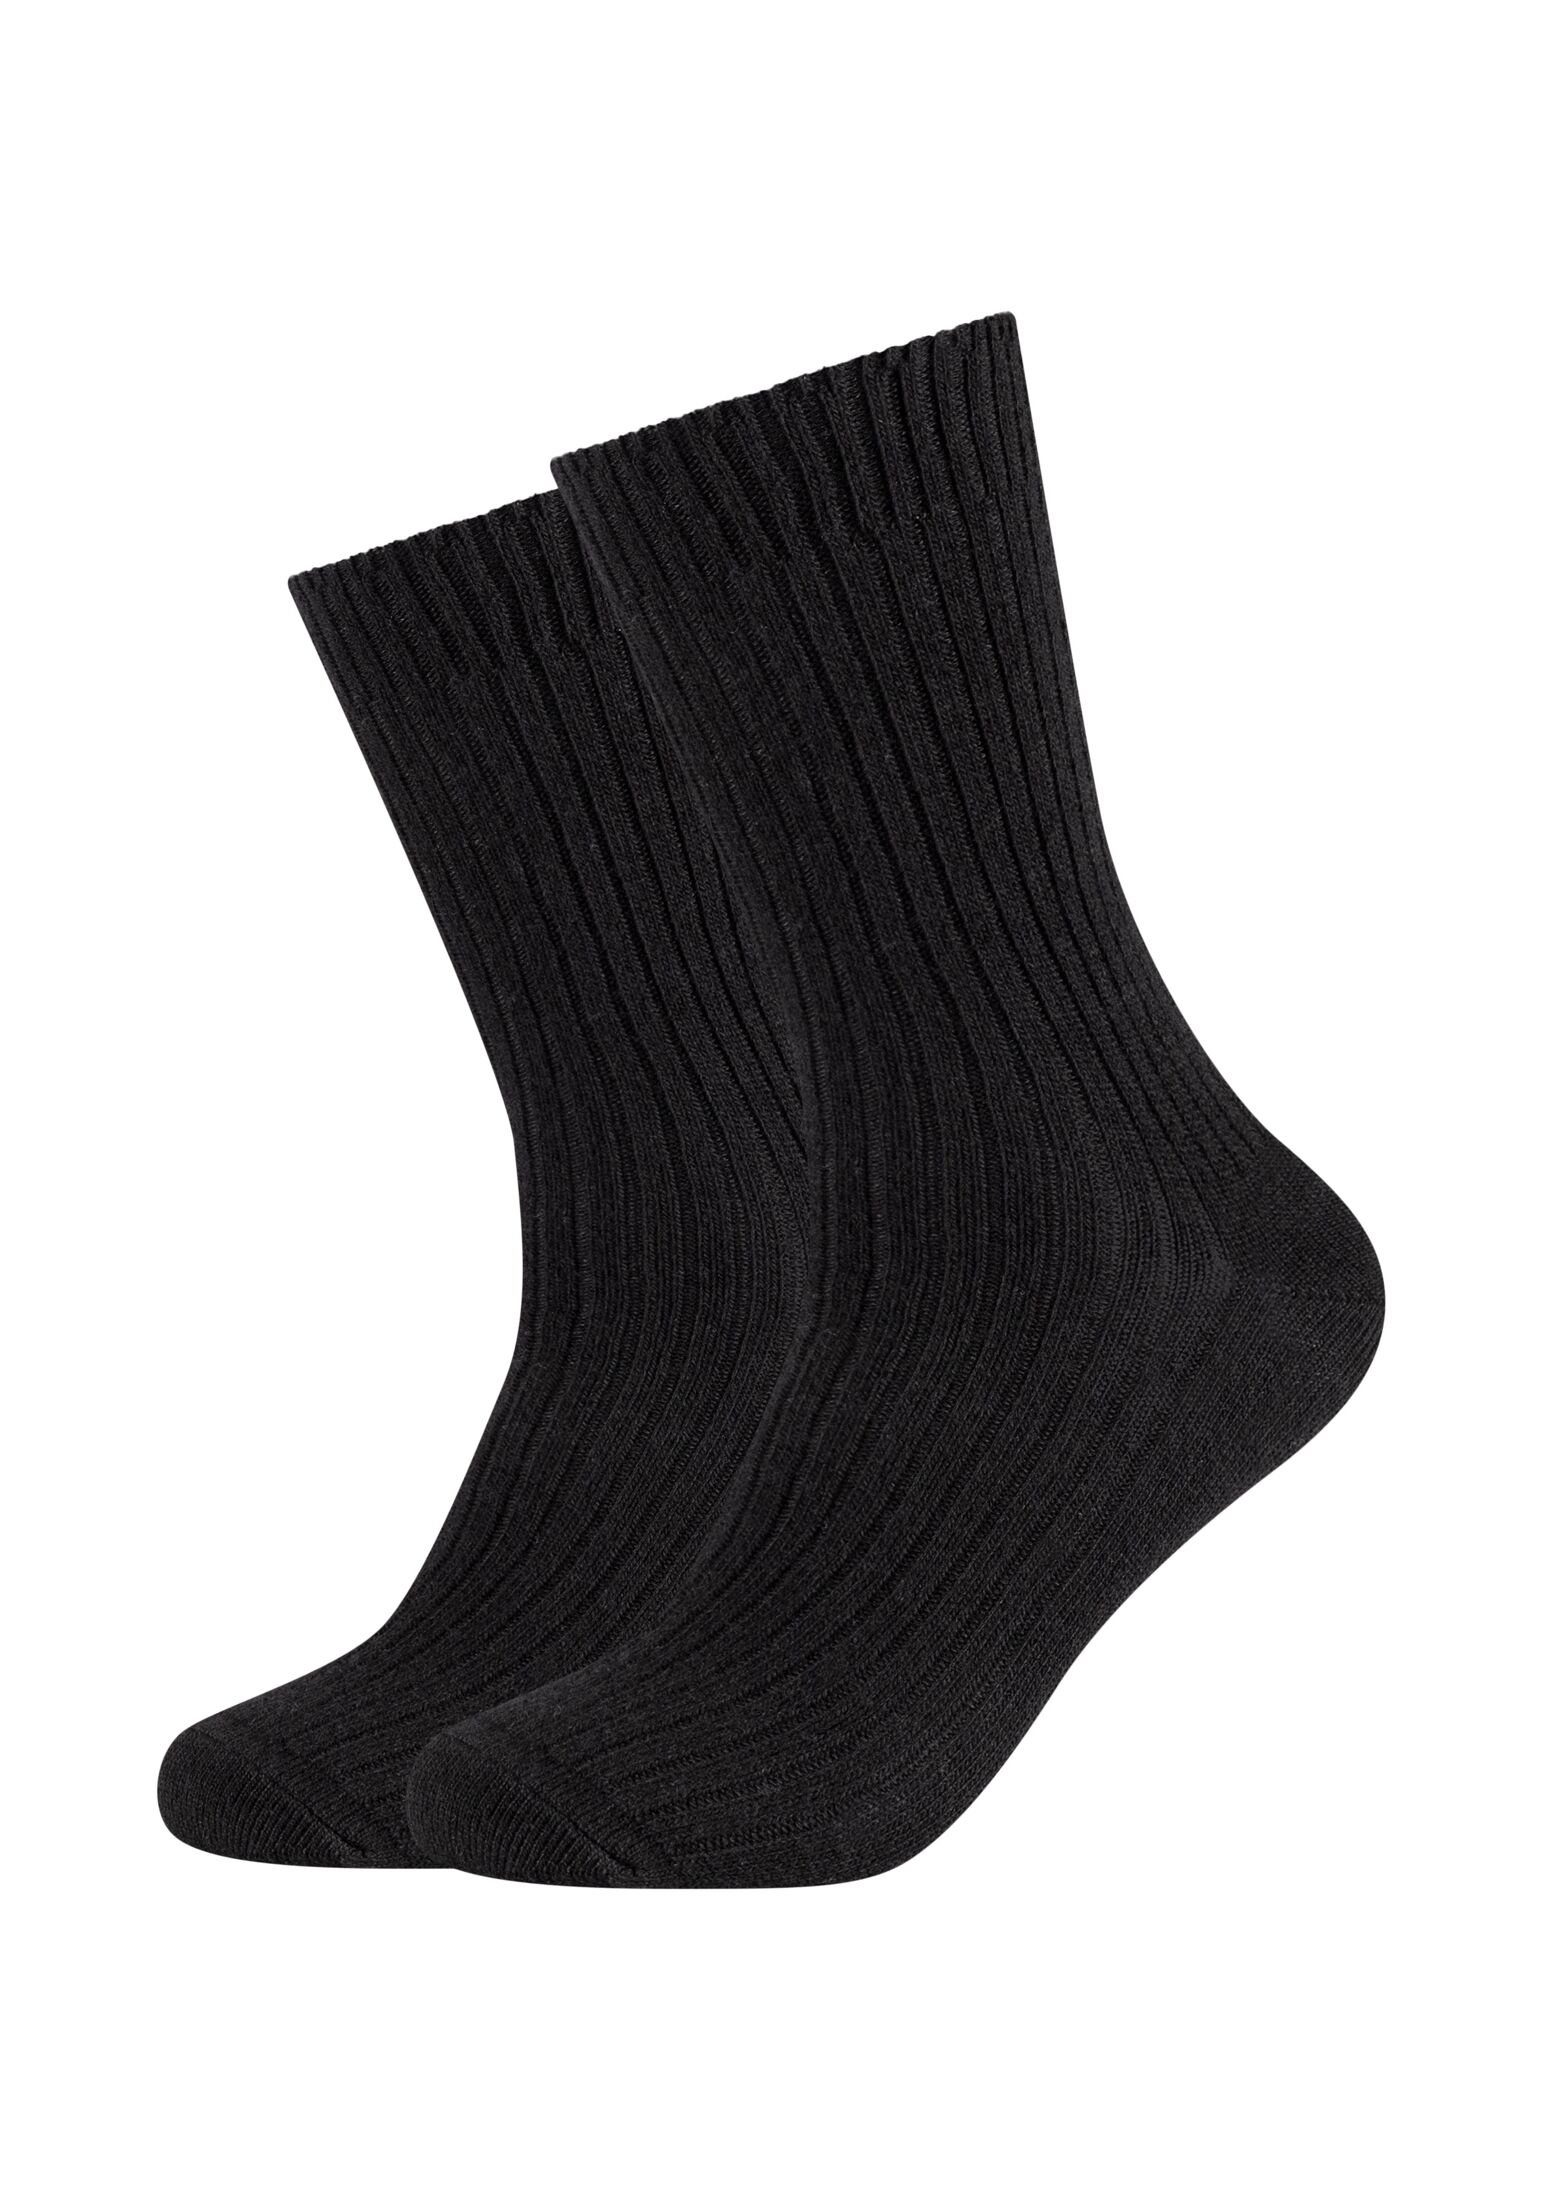 Aus Socken Kaschmir-Anteil Wollmix wärmendem Pack, s.Oliver mit kuschelig 2er Socken